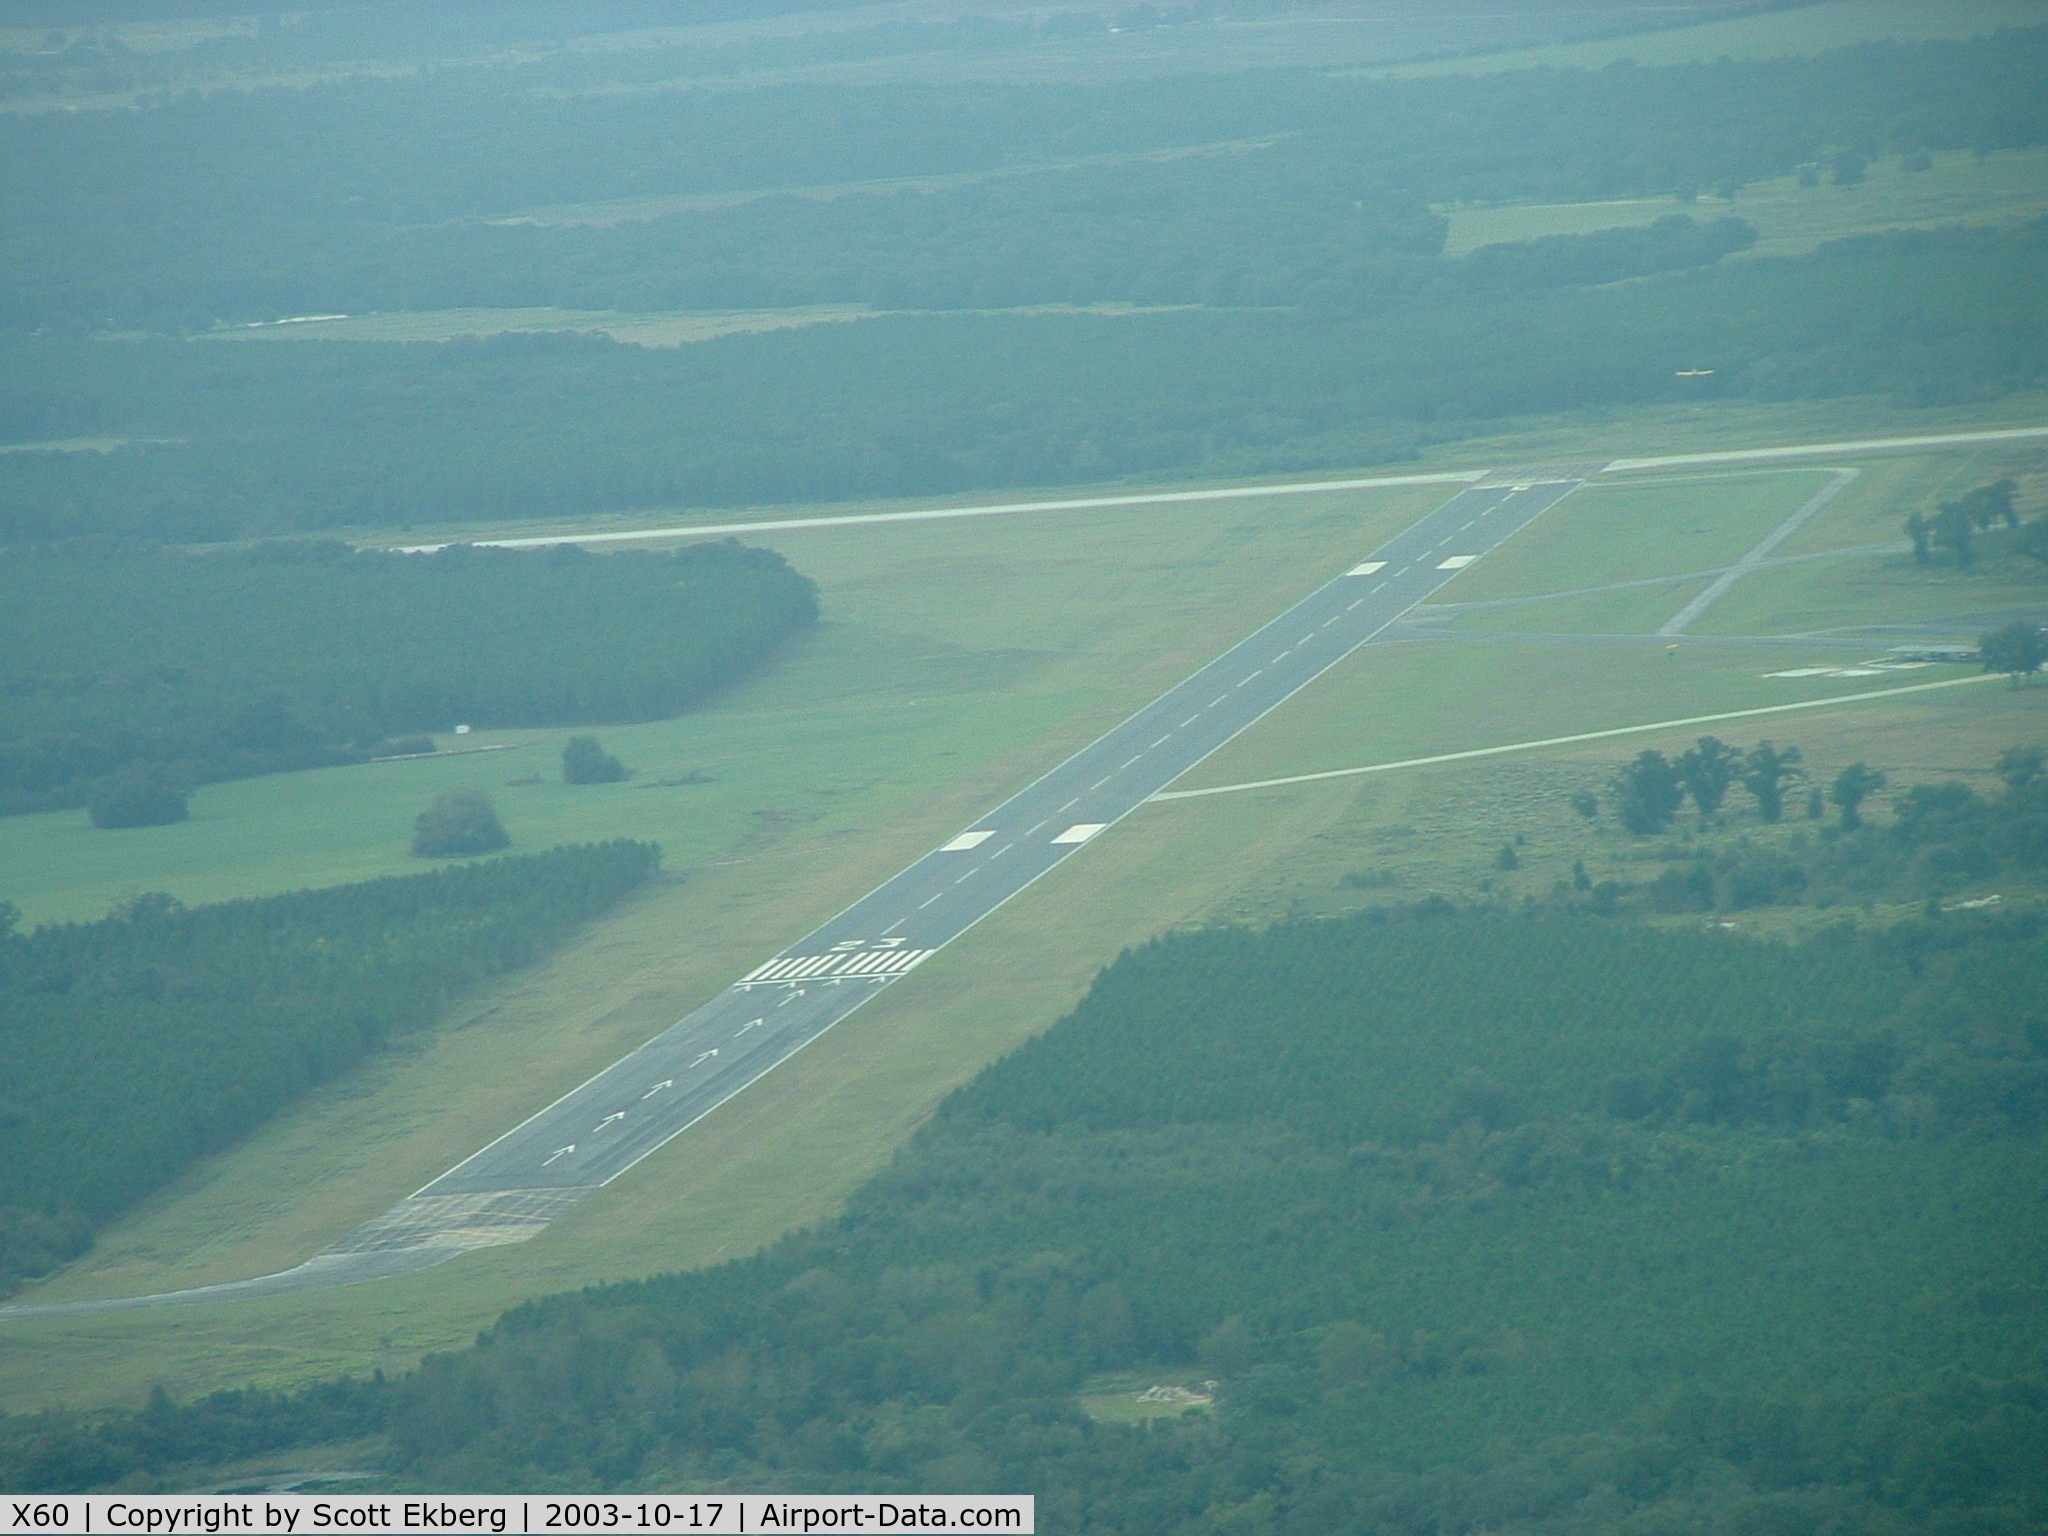 Williston Municipal Airport (X60) - X60 10/17/2003